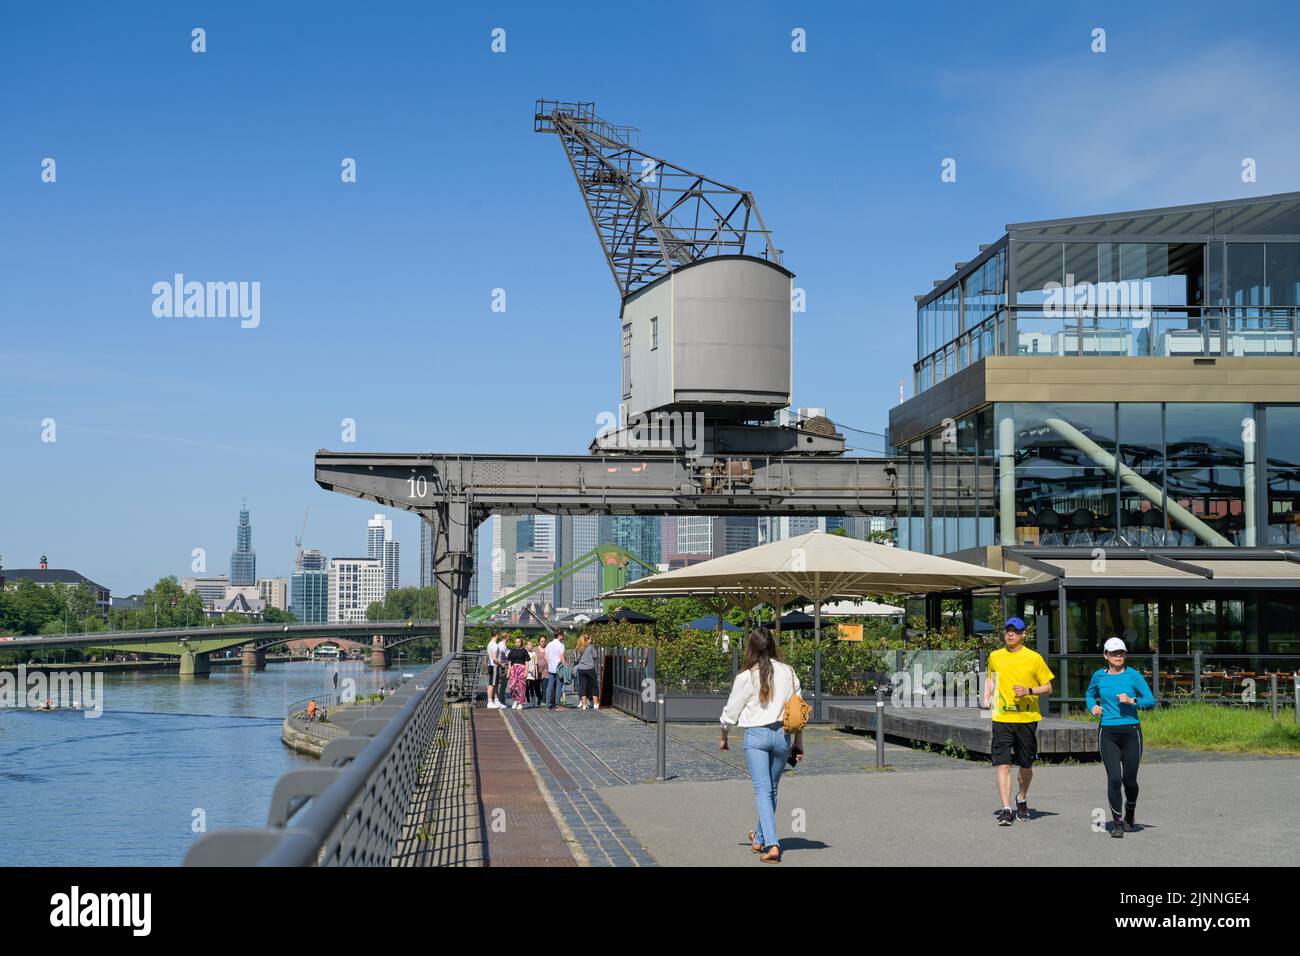 Mainufer, harbour crane, Weseler Werft, Frankfurt am Main, Hesse, Germany Stock Photo